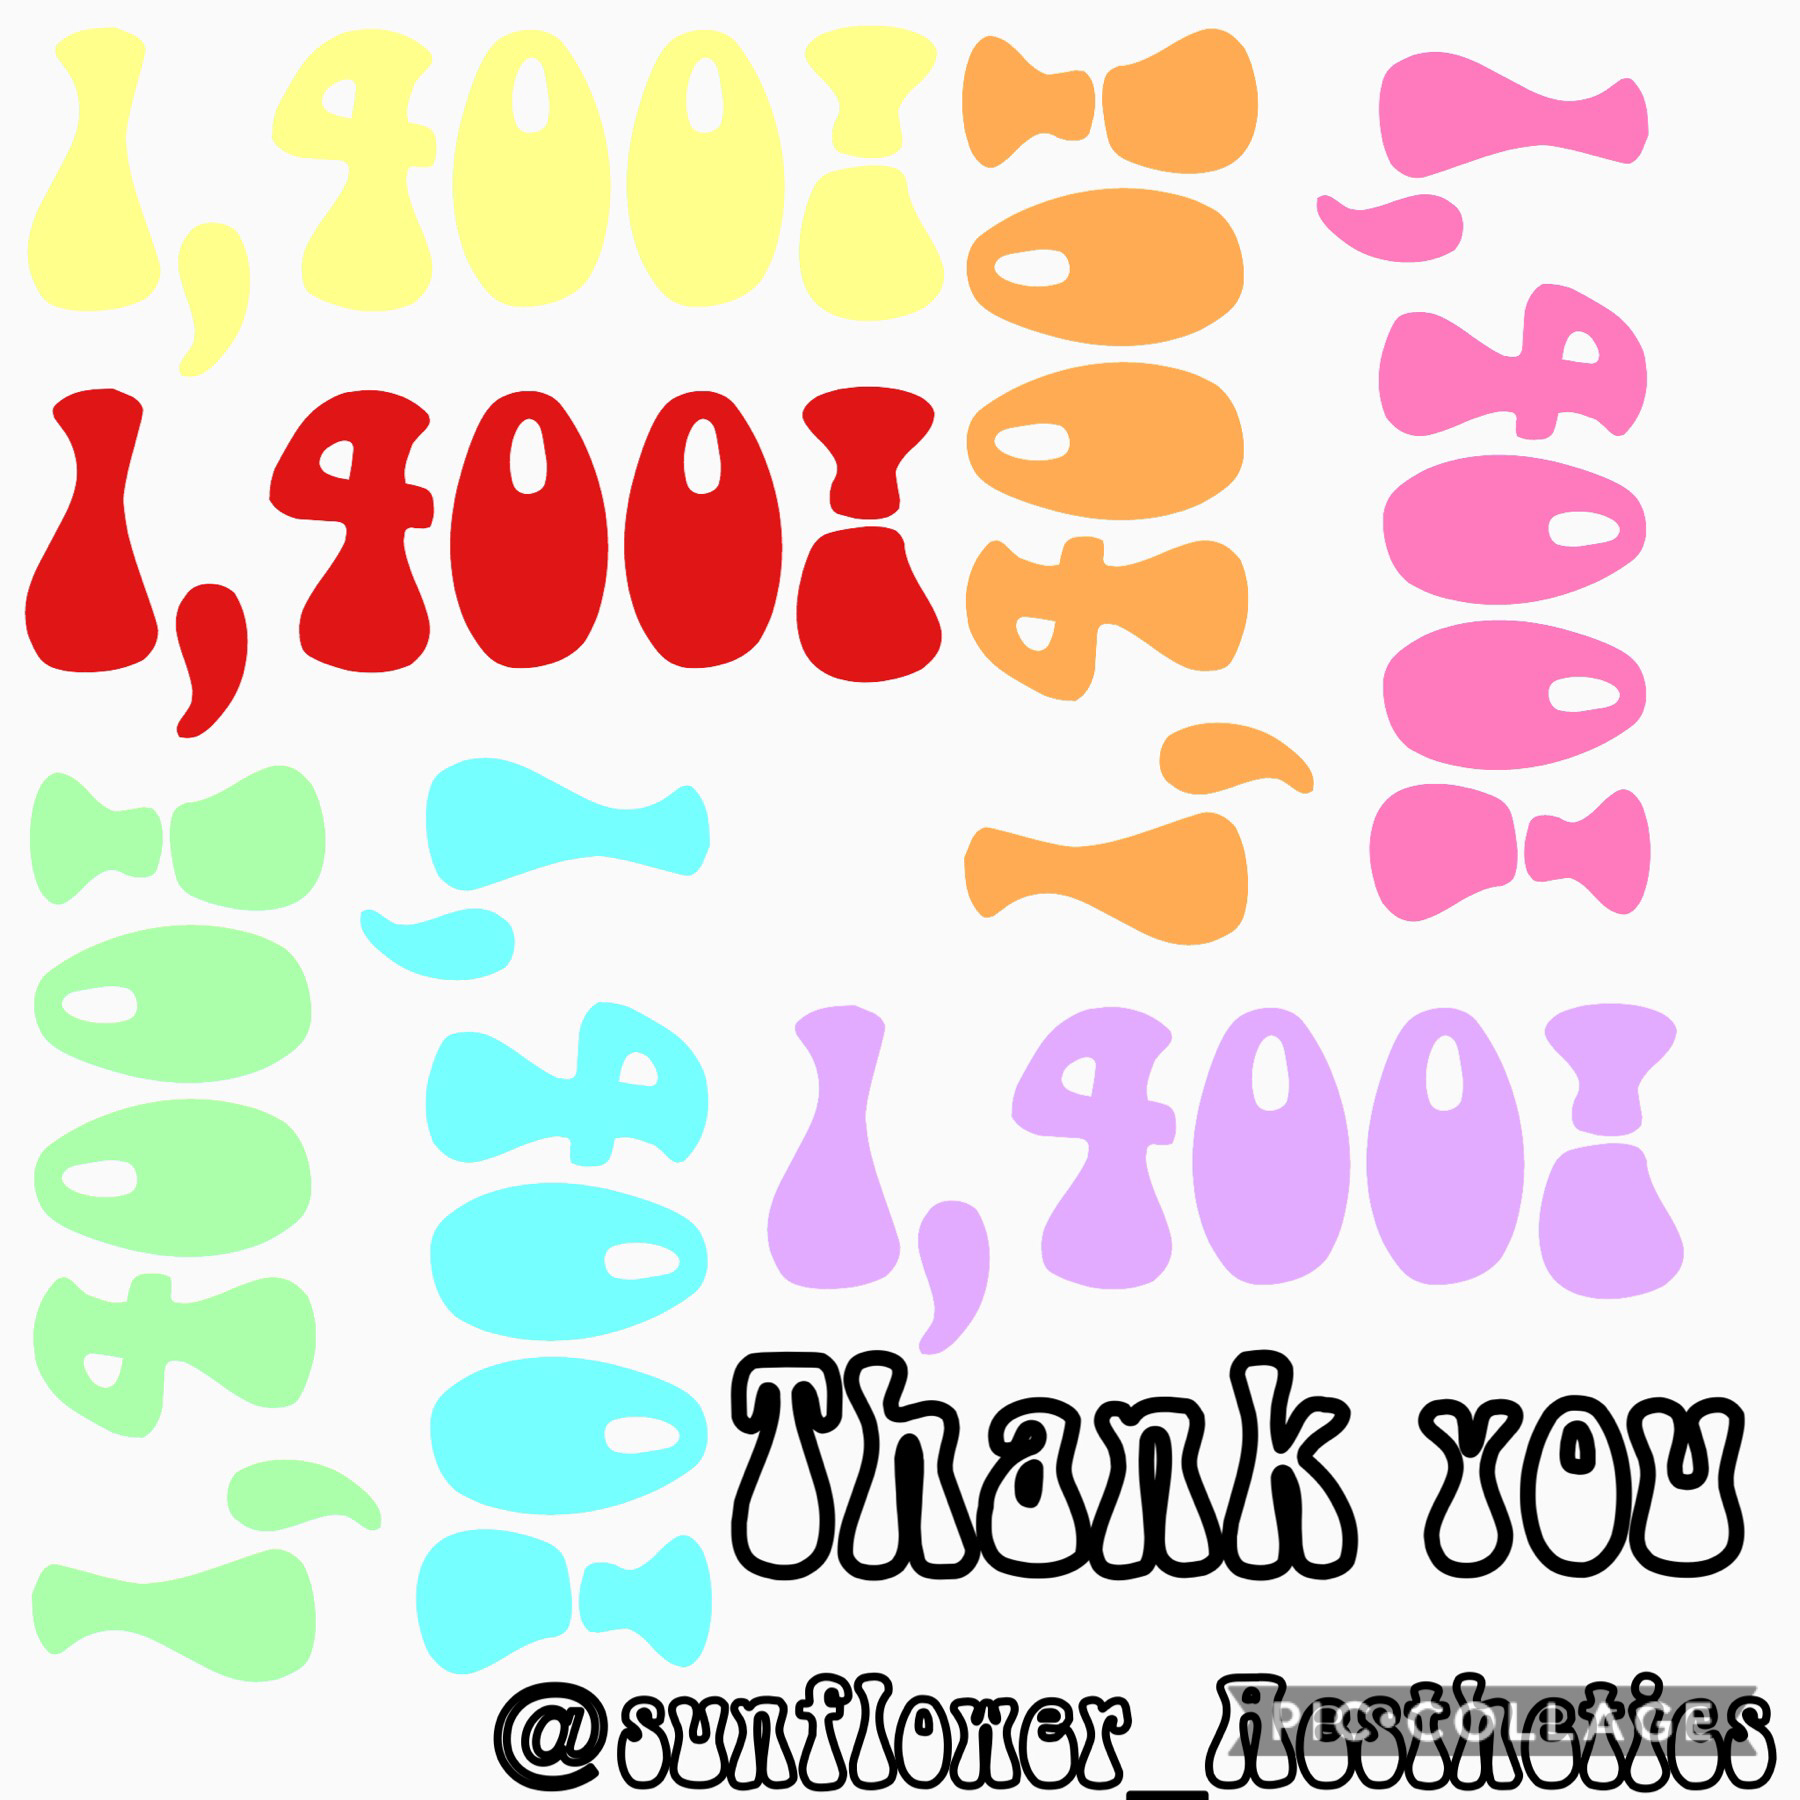 1,400 followers YAY 🥳 